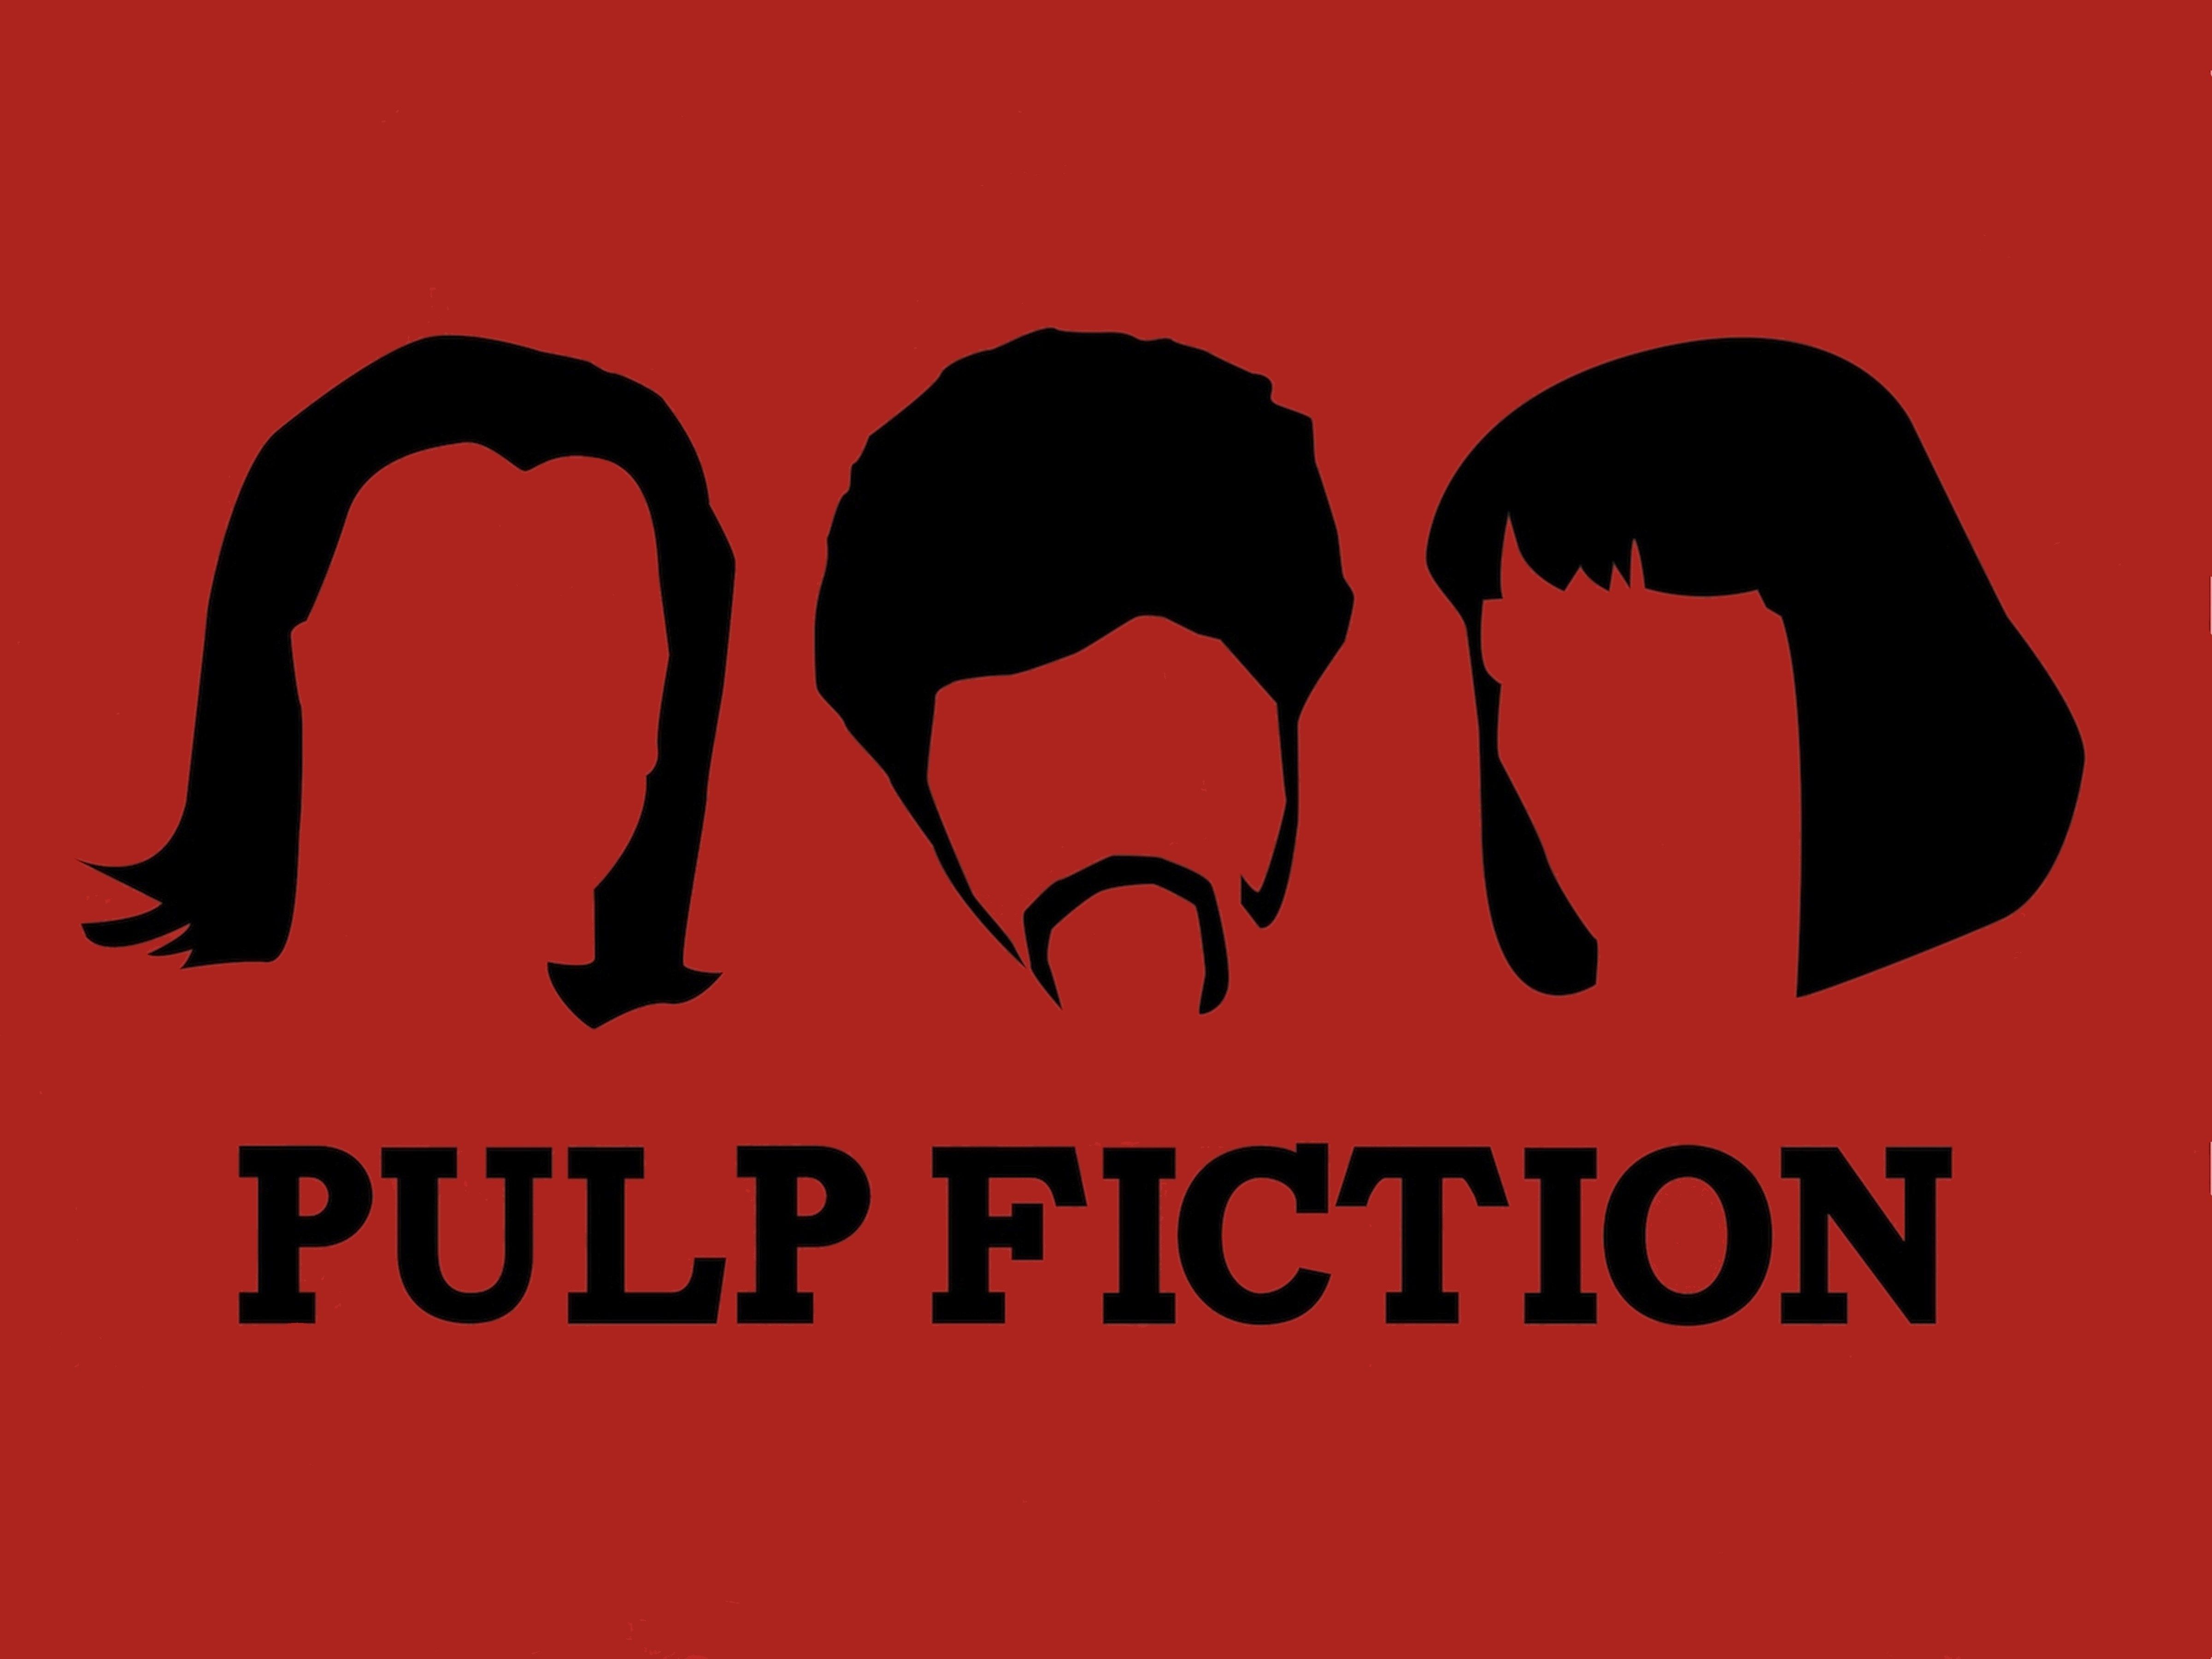 Free download pulp fiction. Pulp fiction, Pulp fiction comics, Pulp fiction art